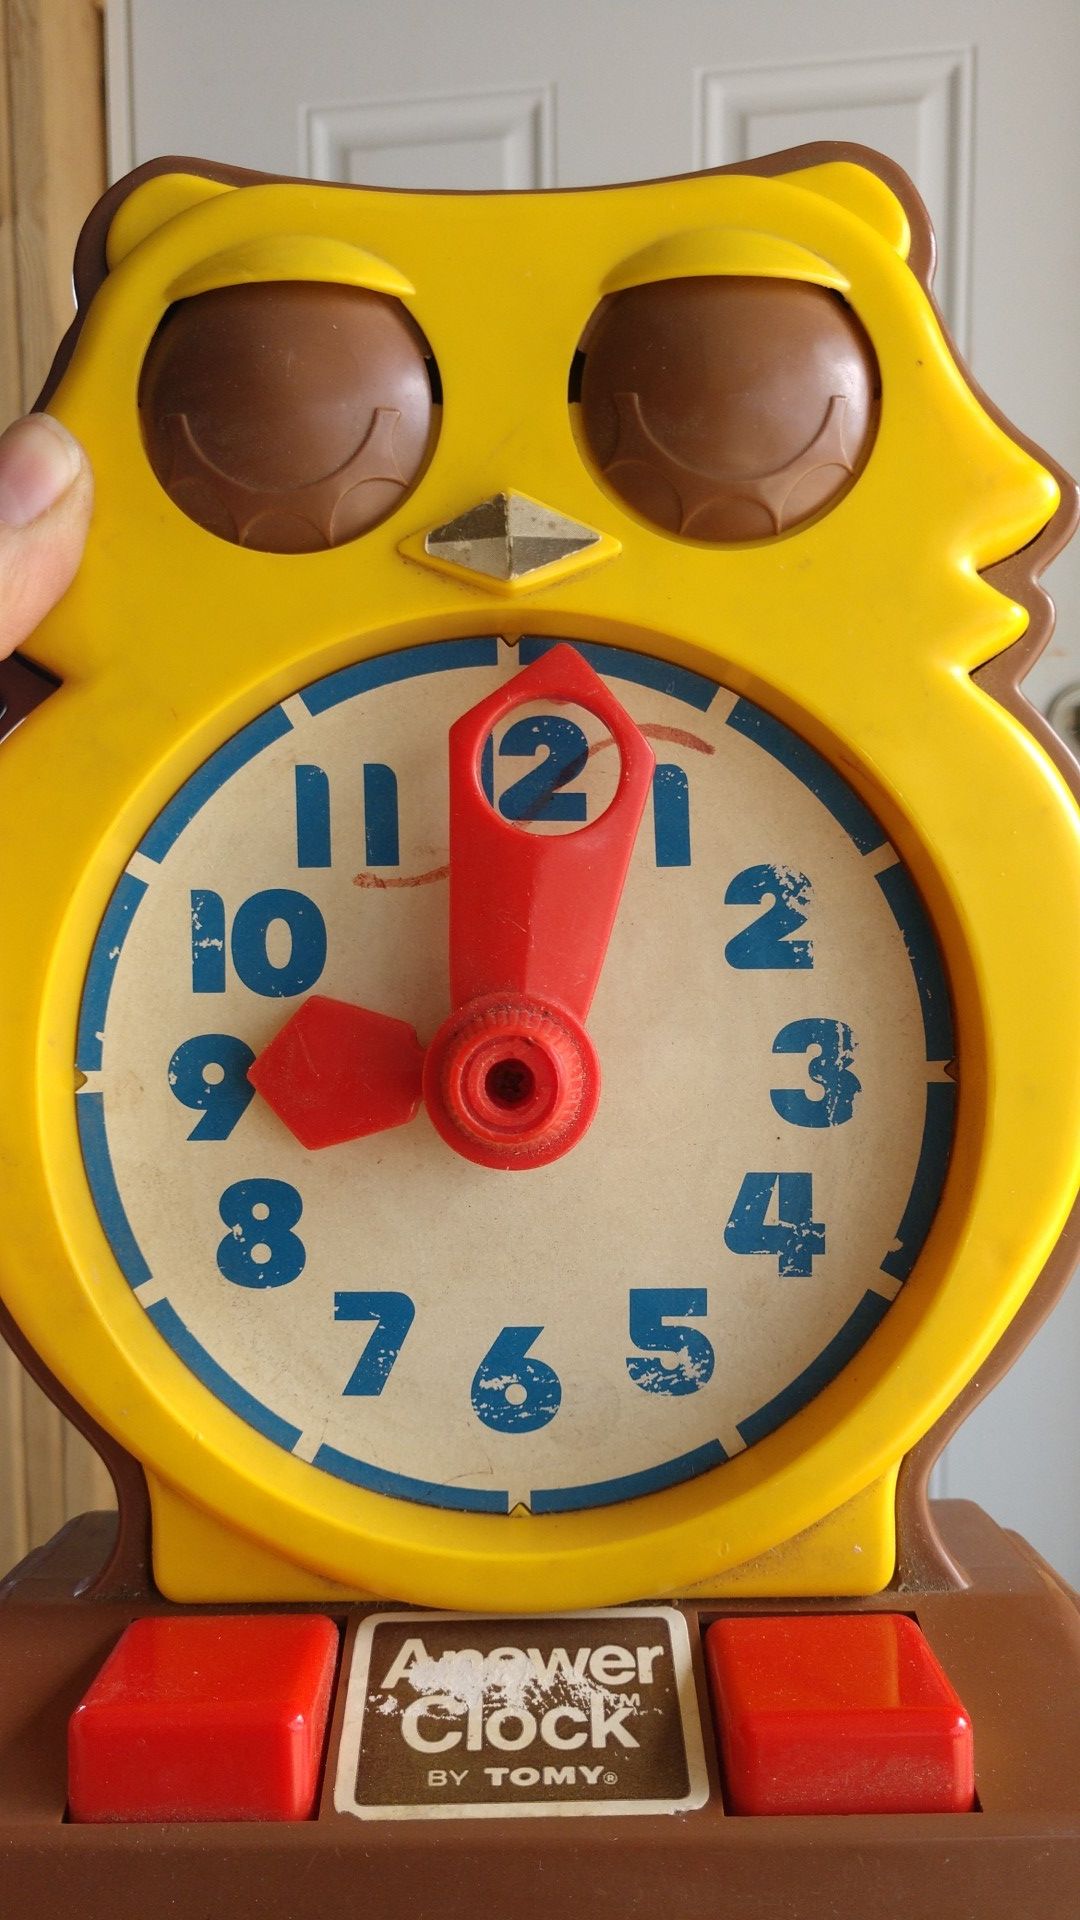 Vintage Tommy answer clock